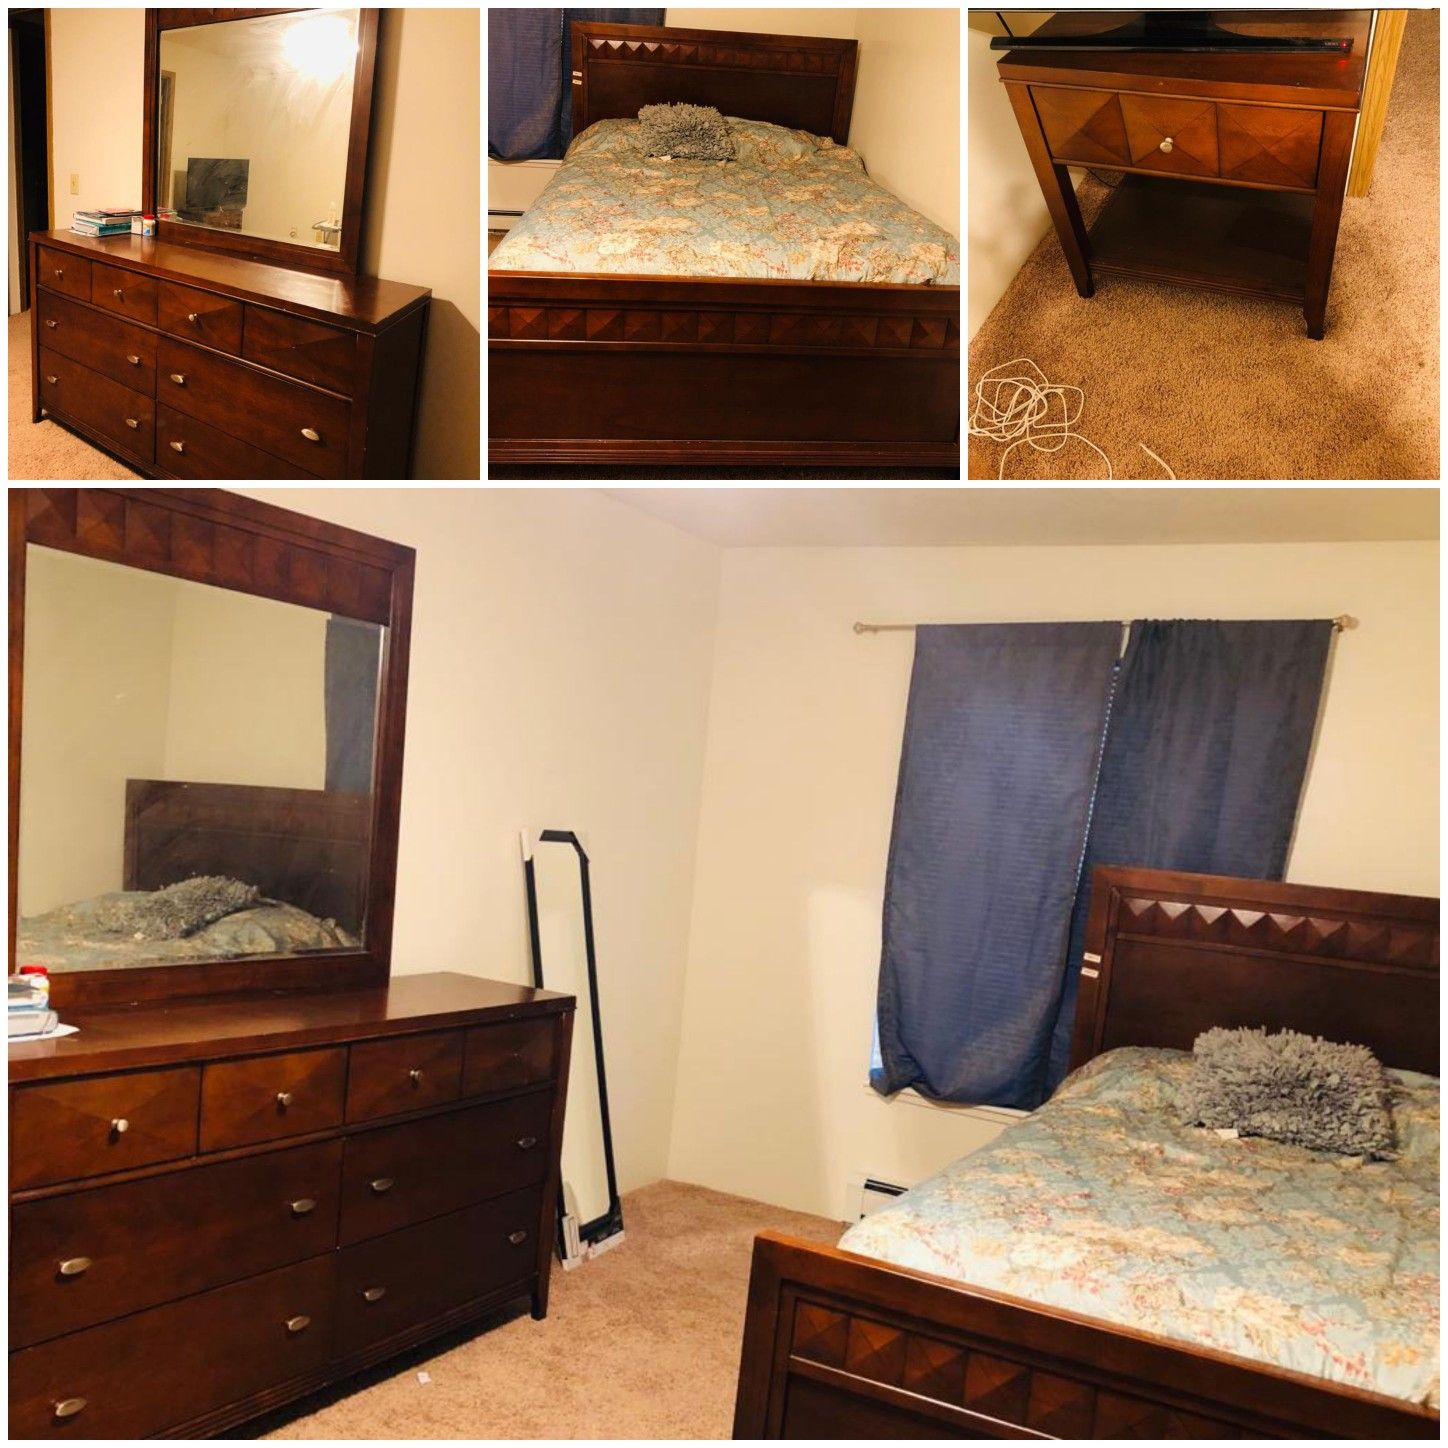 5 sets. Bed, dresser, Lamp stand,mirror, mattress and box